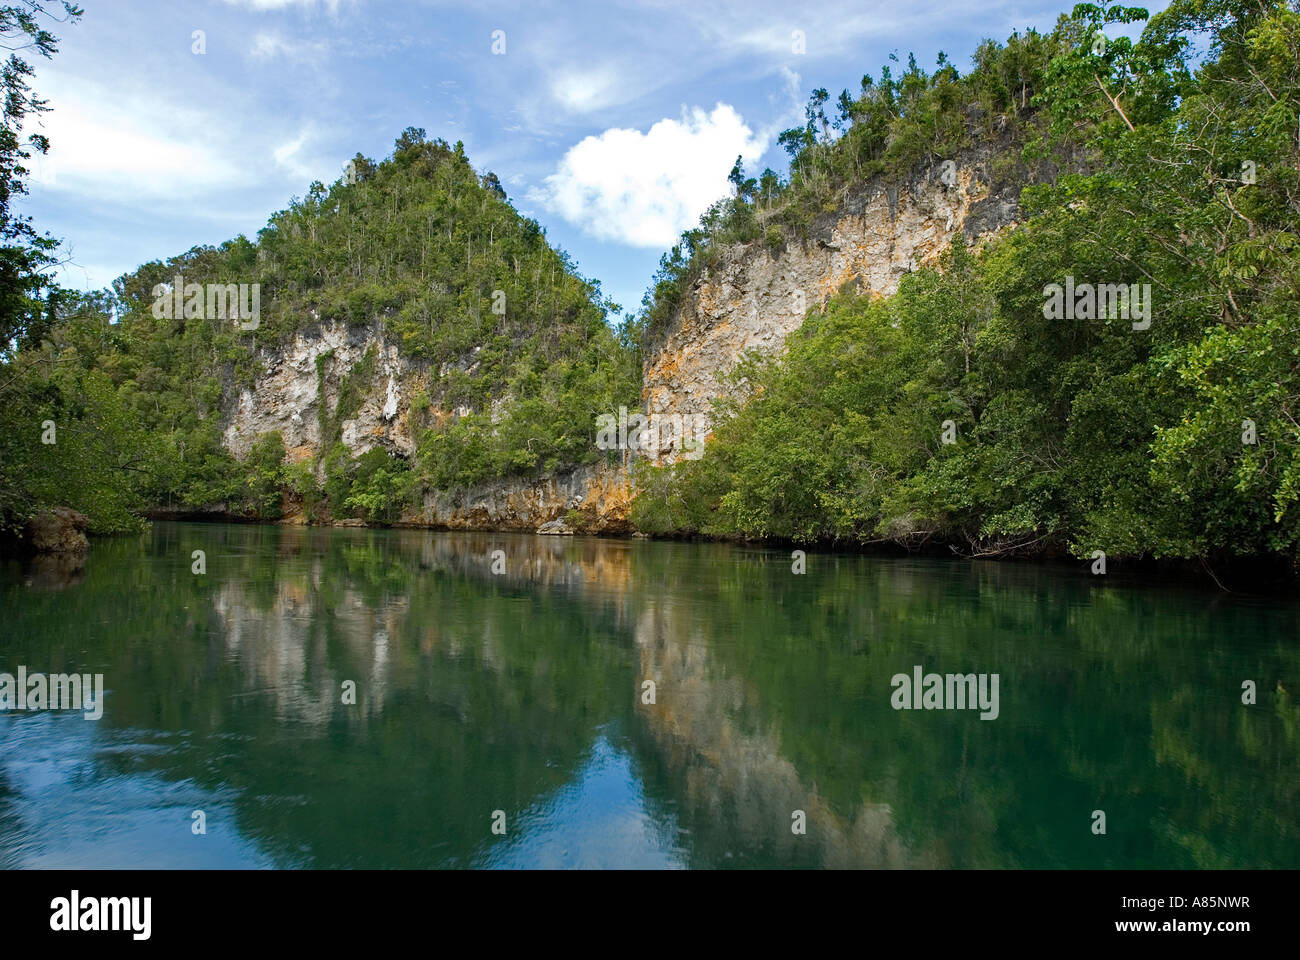 Lush green mangrove forest and limestone coastline of Gam Island, Raja Ampat Indonesia. Stock Photo